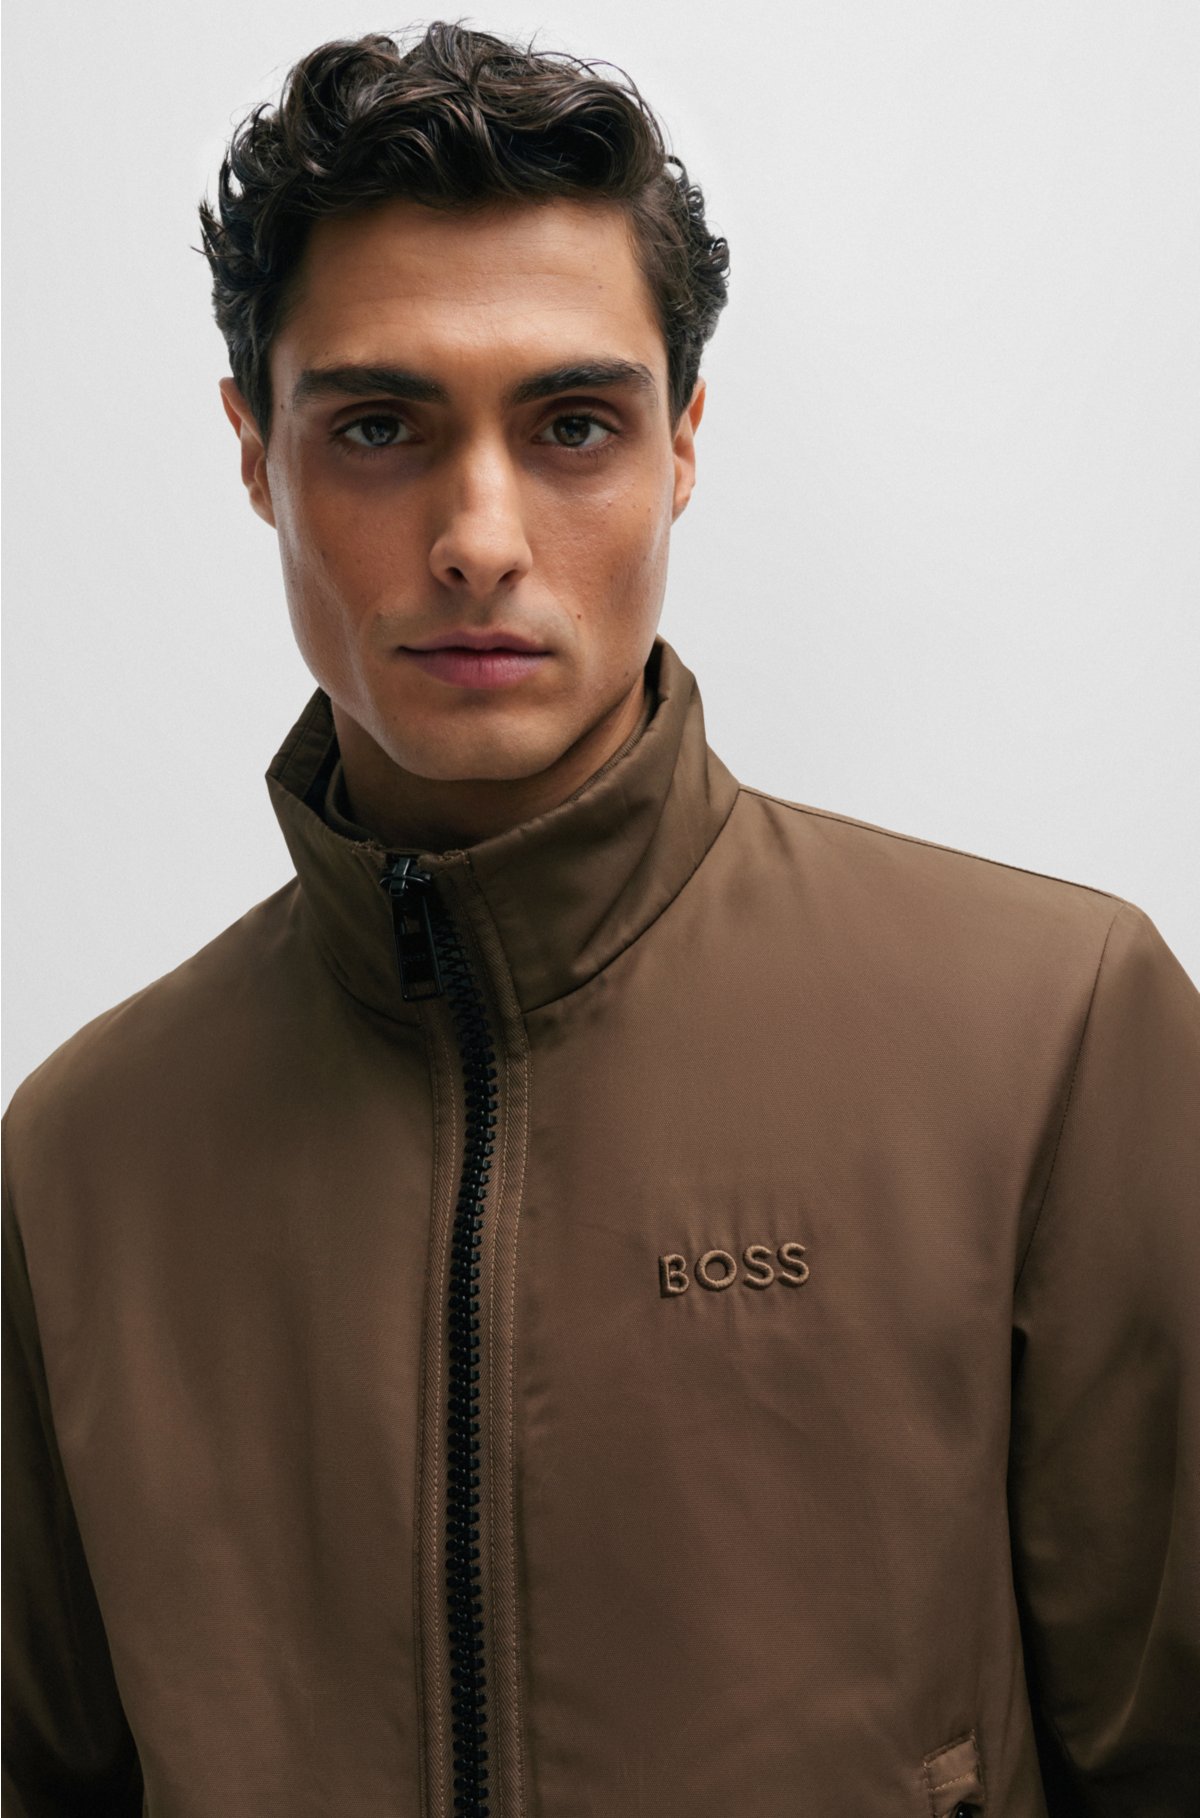 Regular-fit jacket with logo detail, Brown